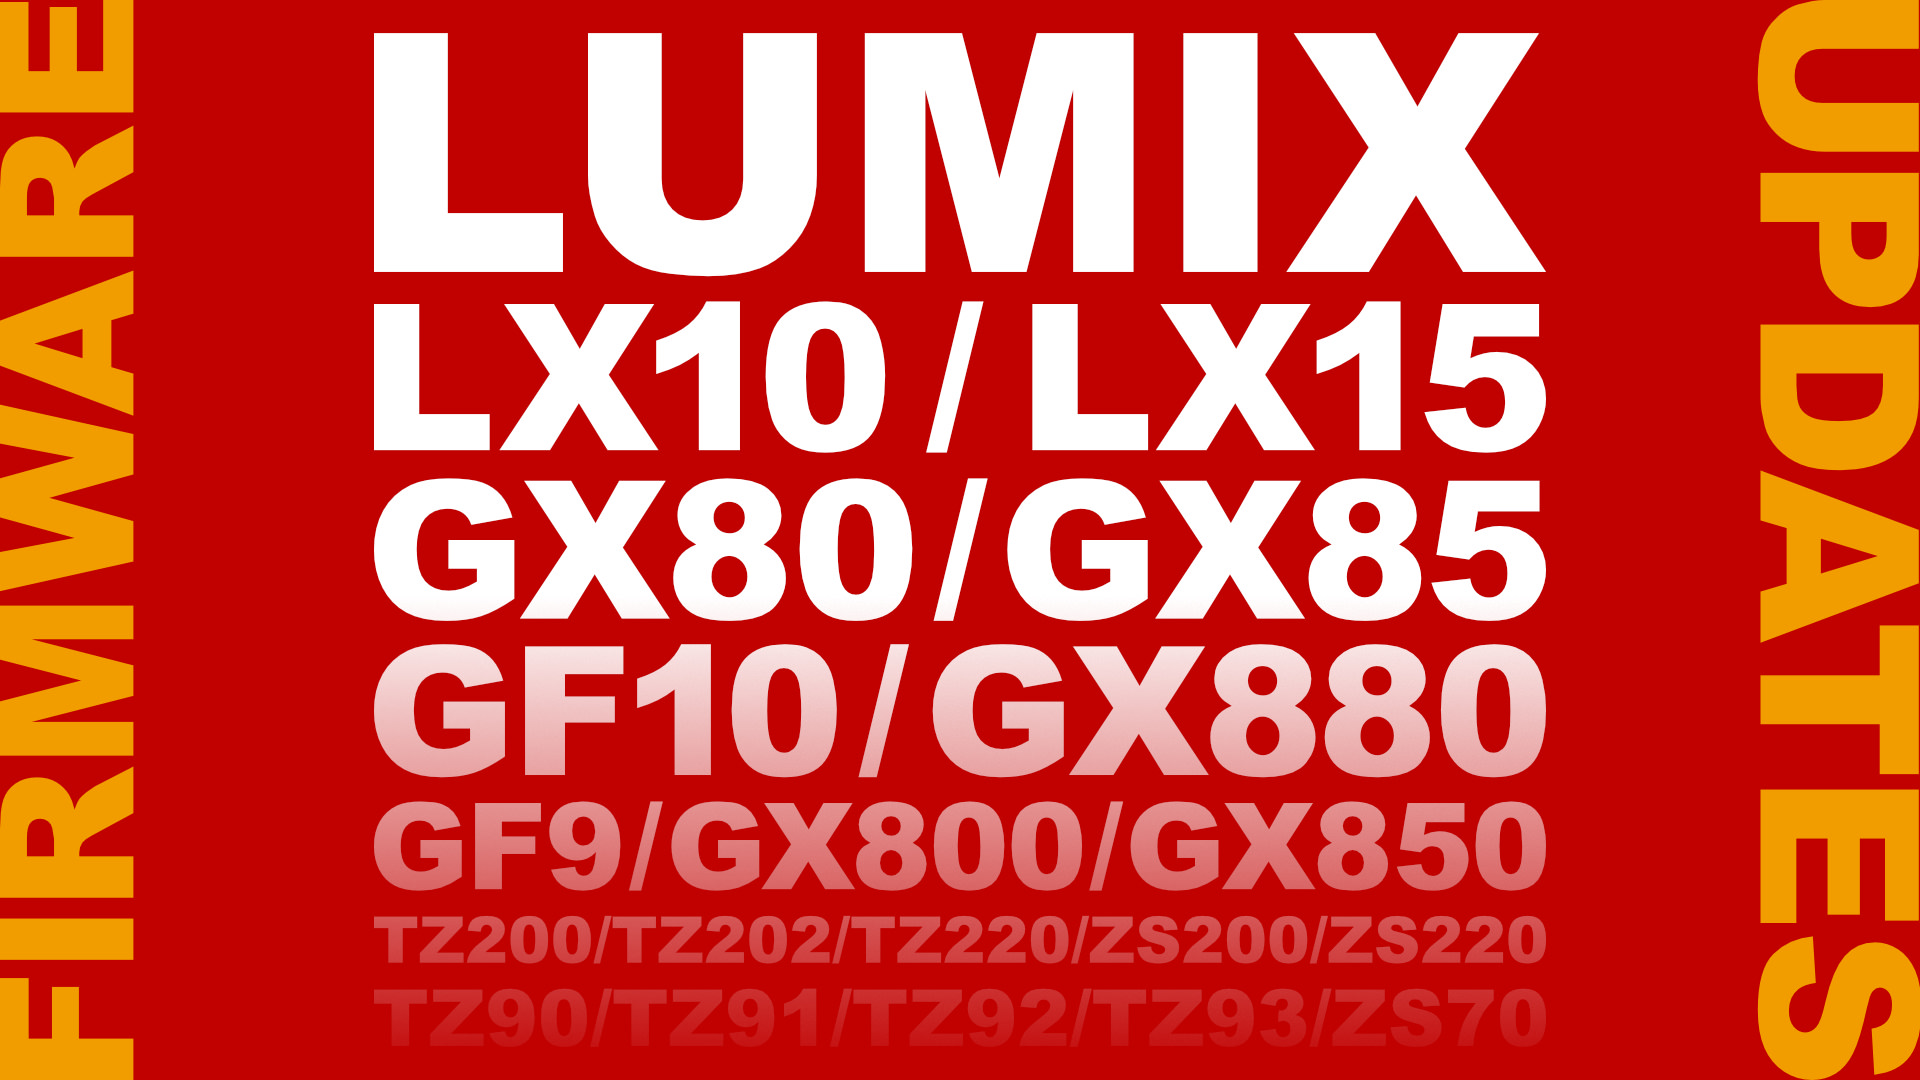 Additional Minor LUMIX Firmware Updates